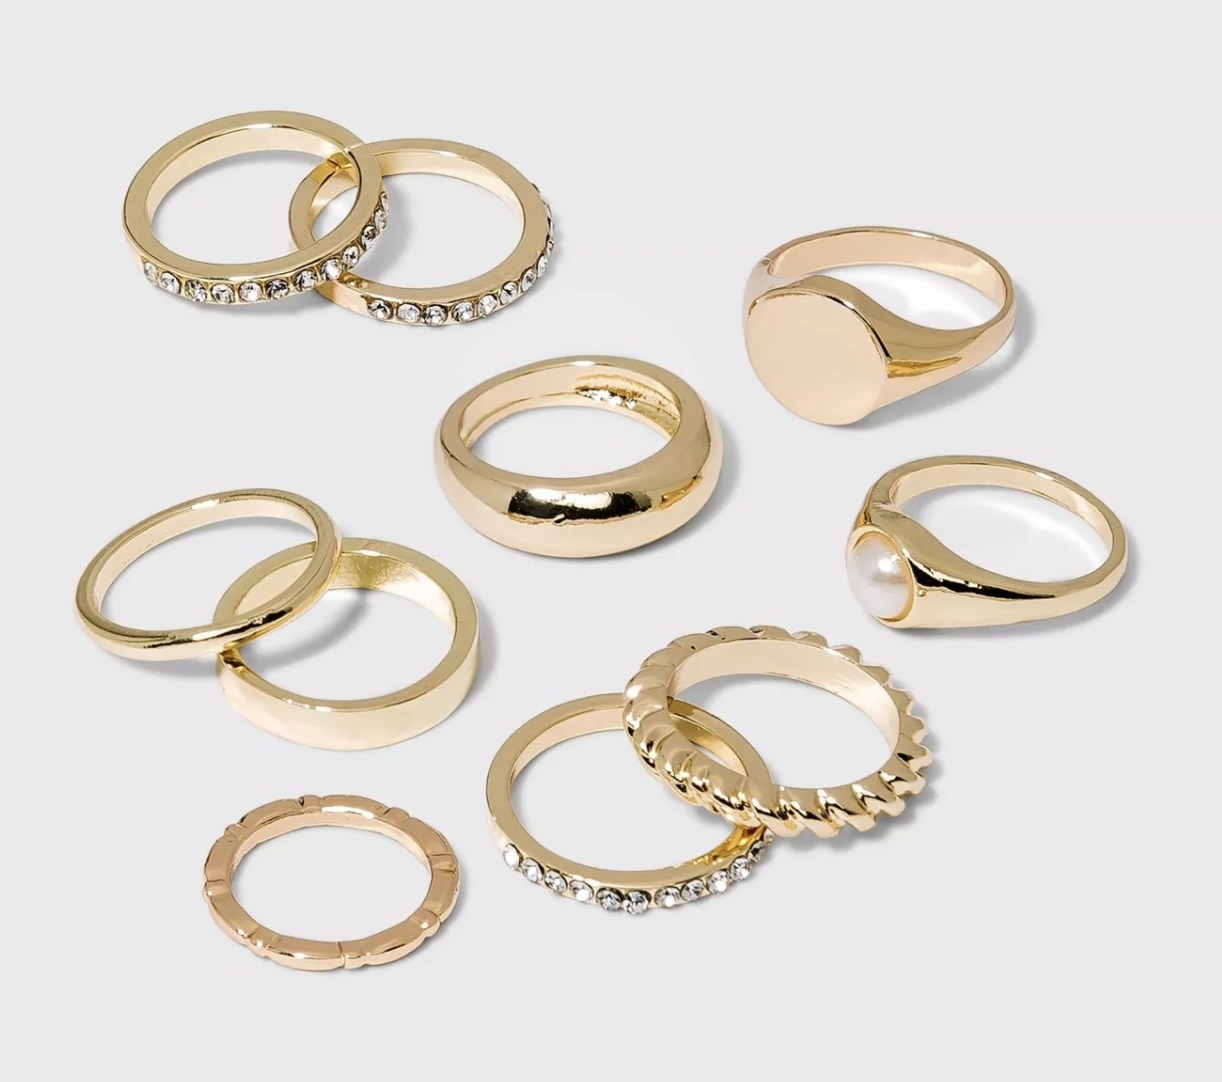 all ten rings displayed